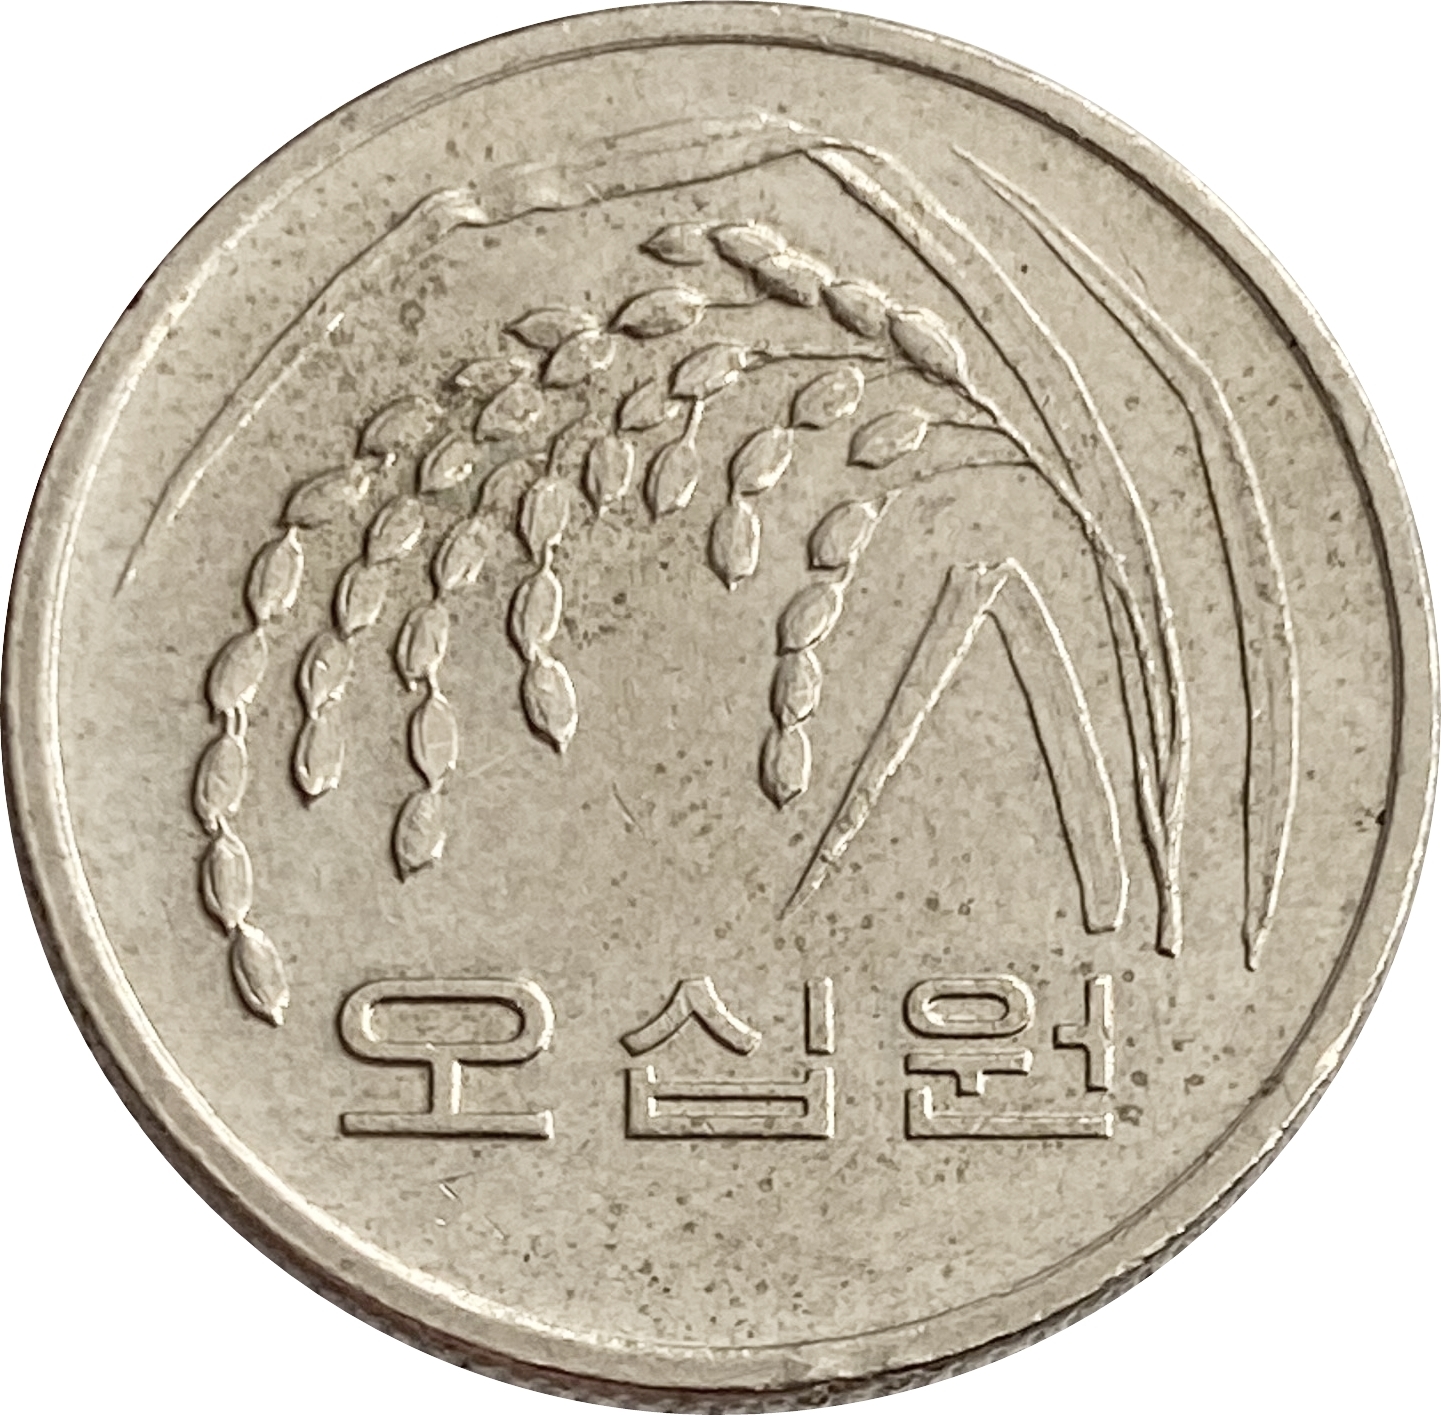 S 50 24. Монеты Южной Кореи. Монета 500 вон 1983. Монет Южная Корея 10 вон 2005 год. 50 Вон.